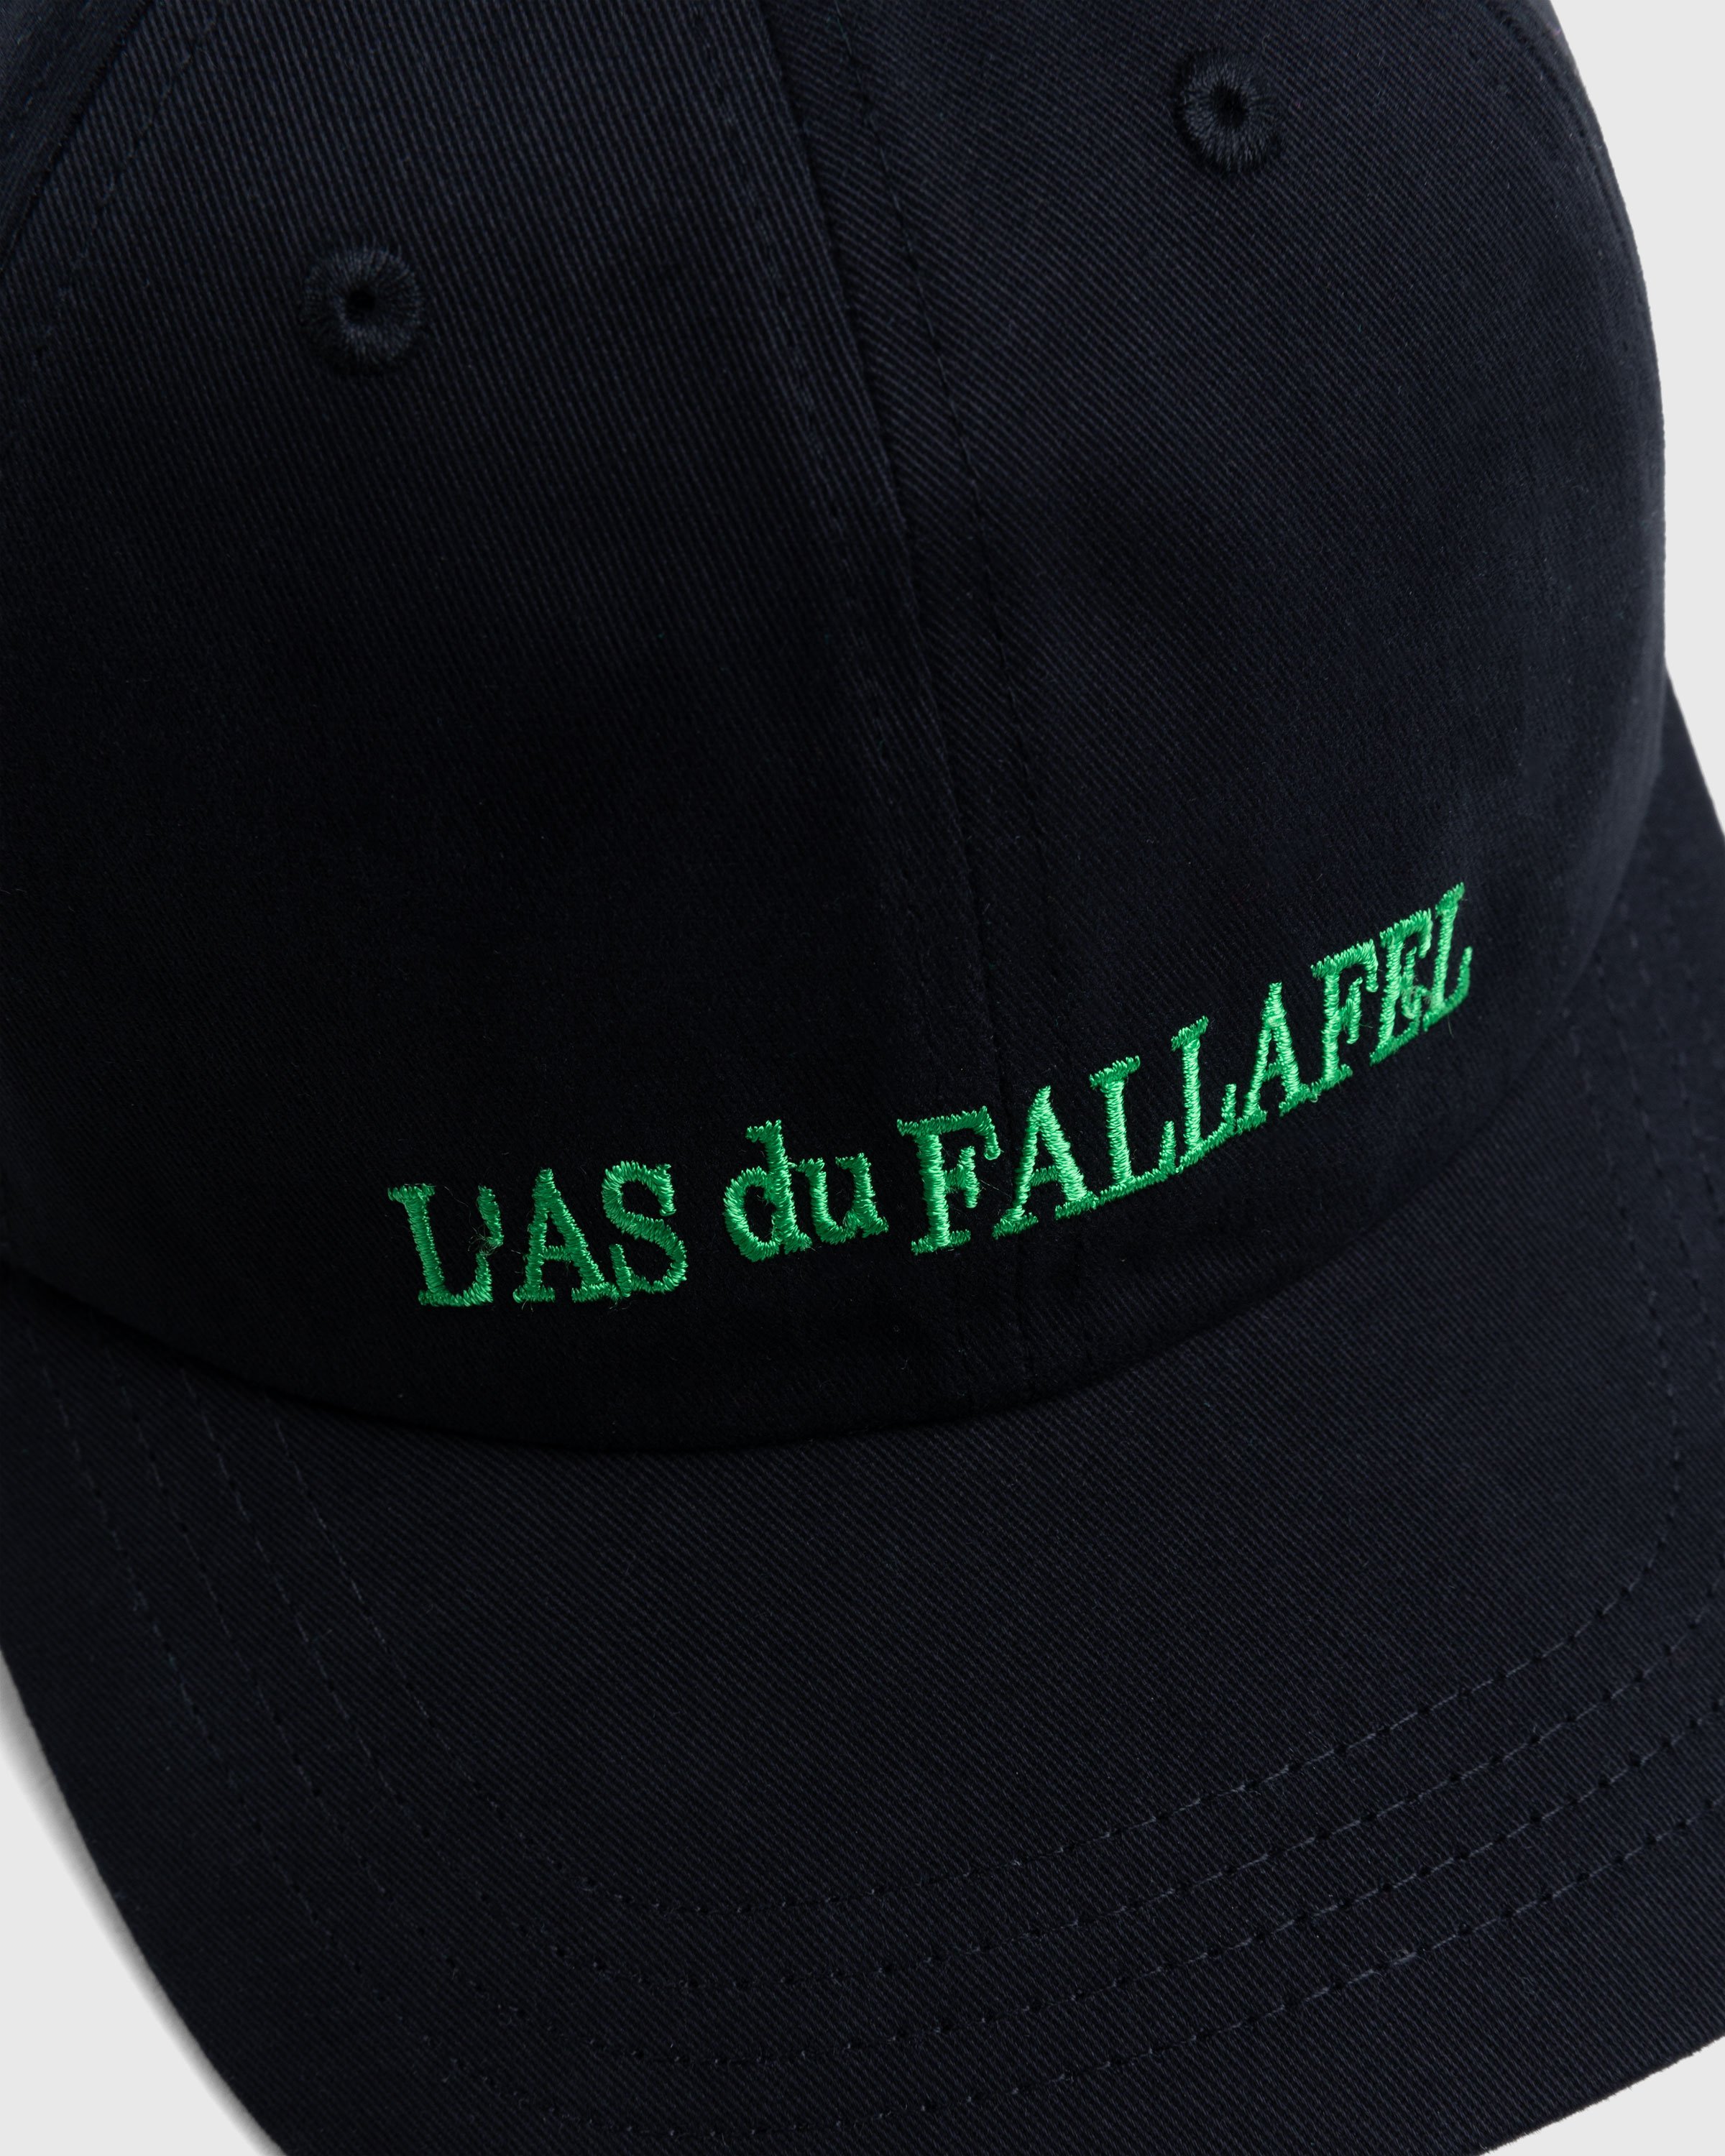 L'As du Fallafel x Highsnobiety - Ball Cap - Accessories - Black - Image 4